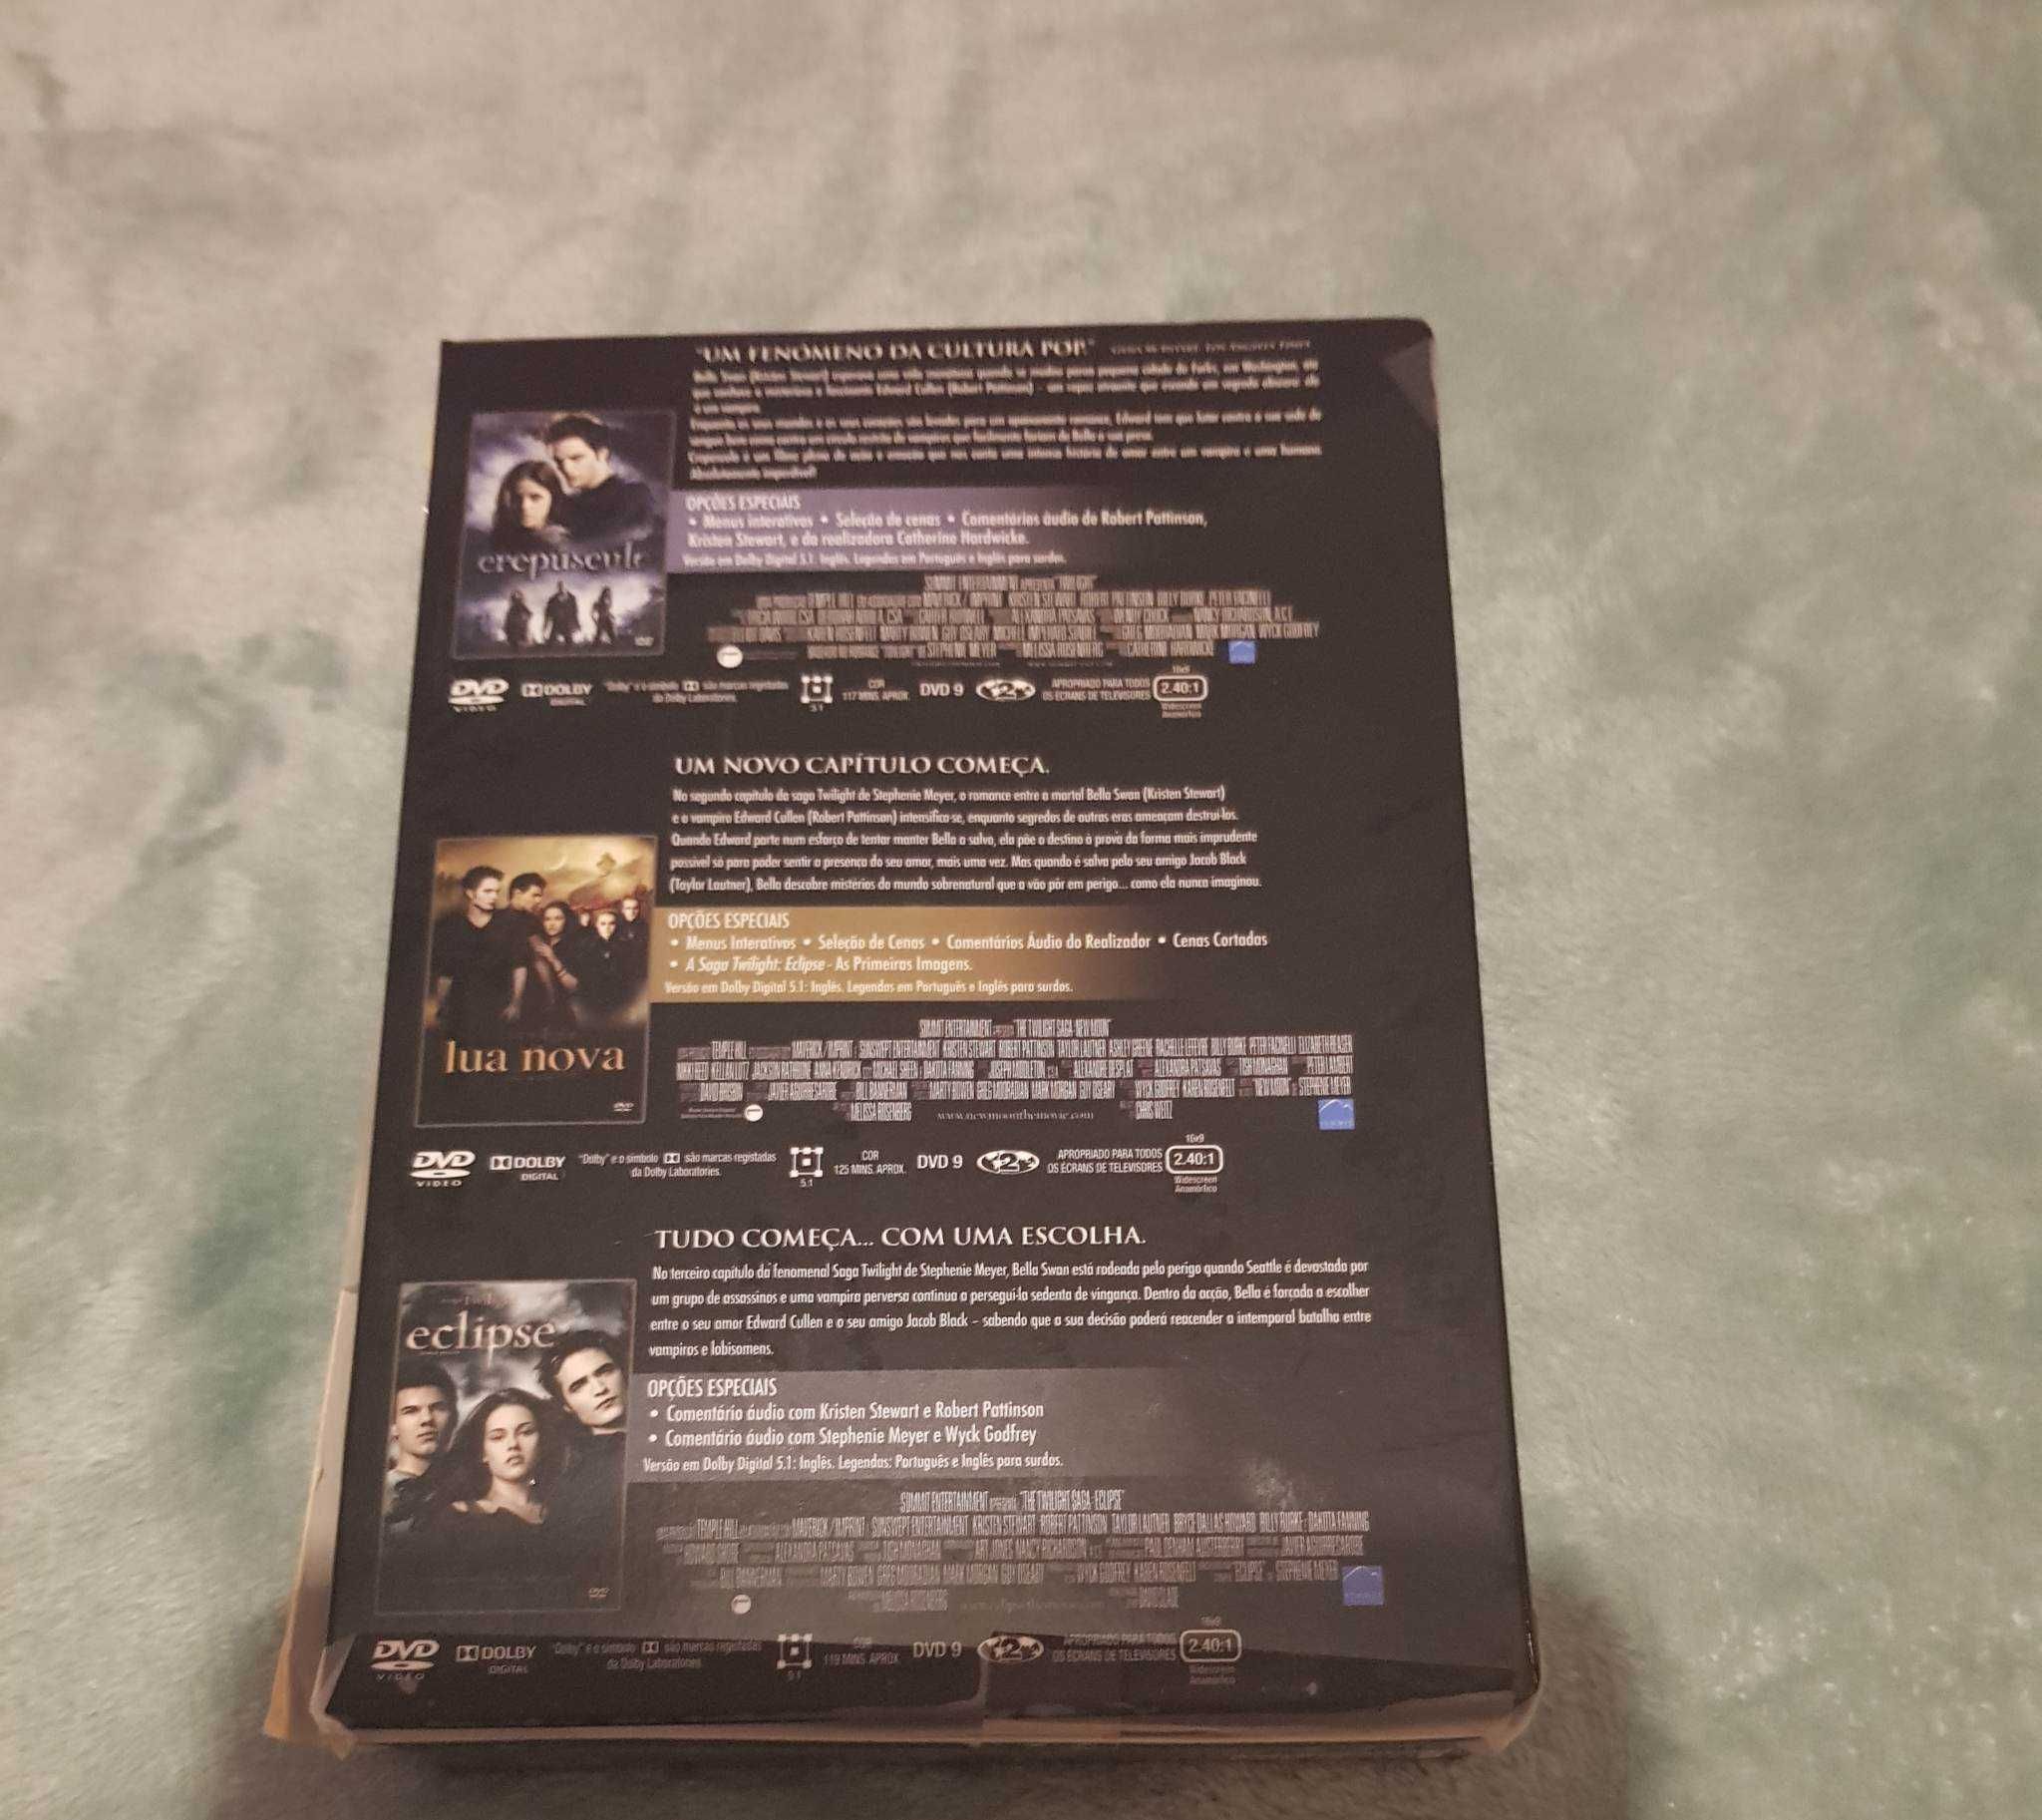 Conjunto de 3 DVDS da Saga Twilight